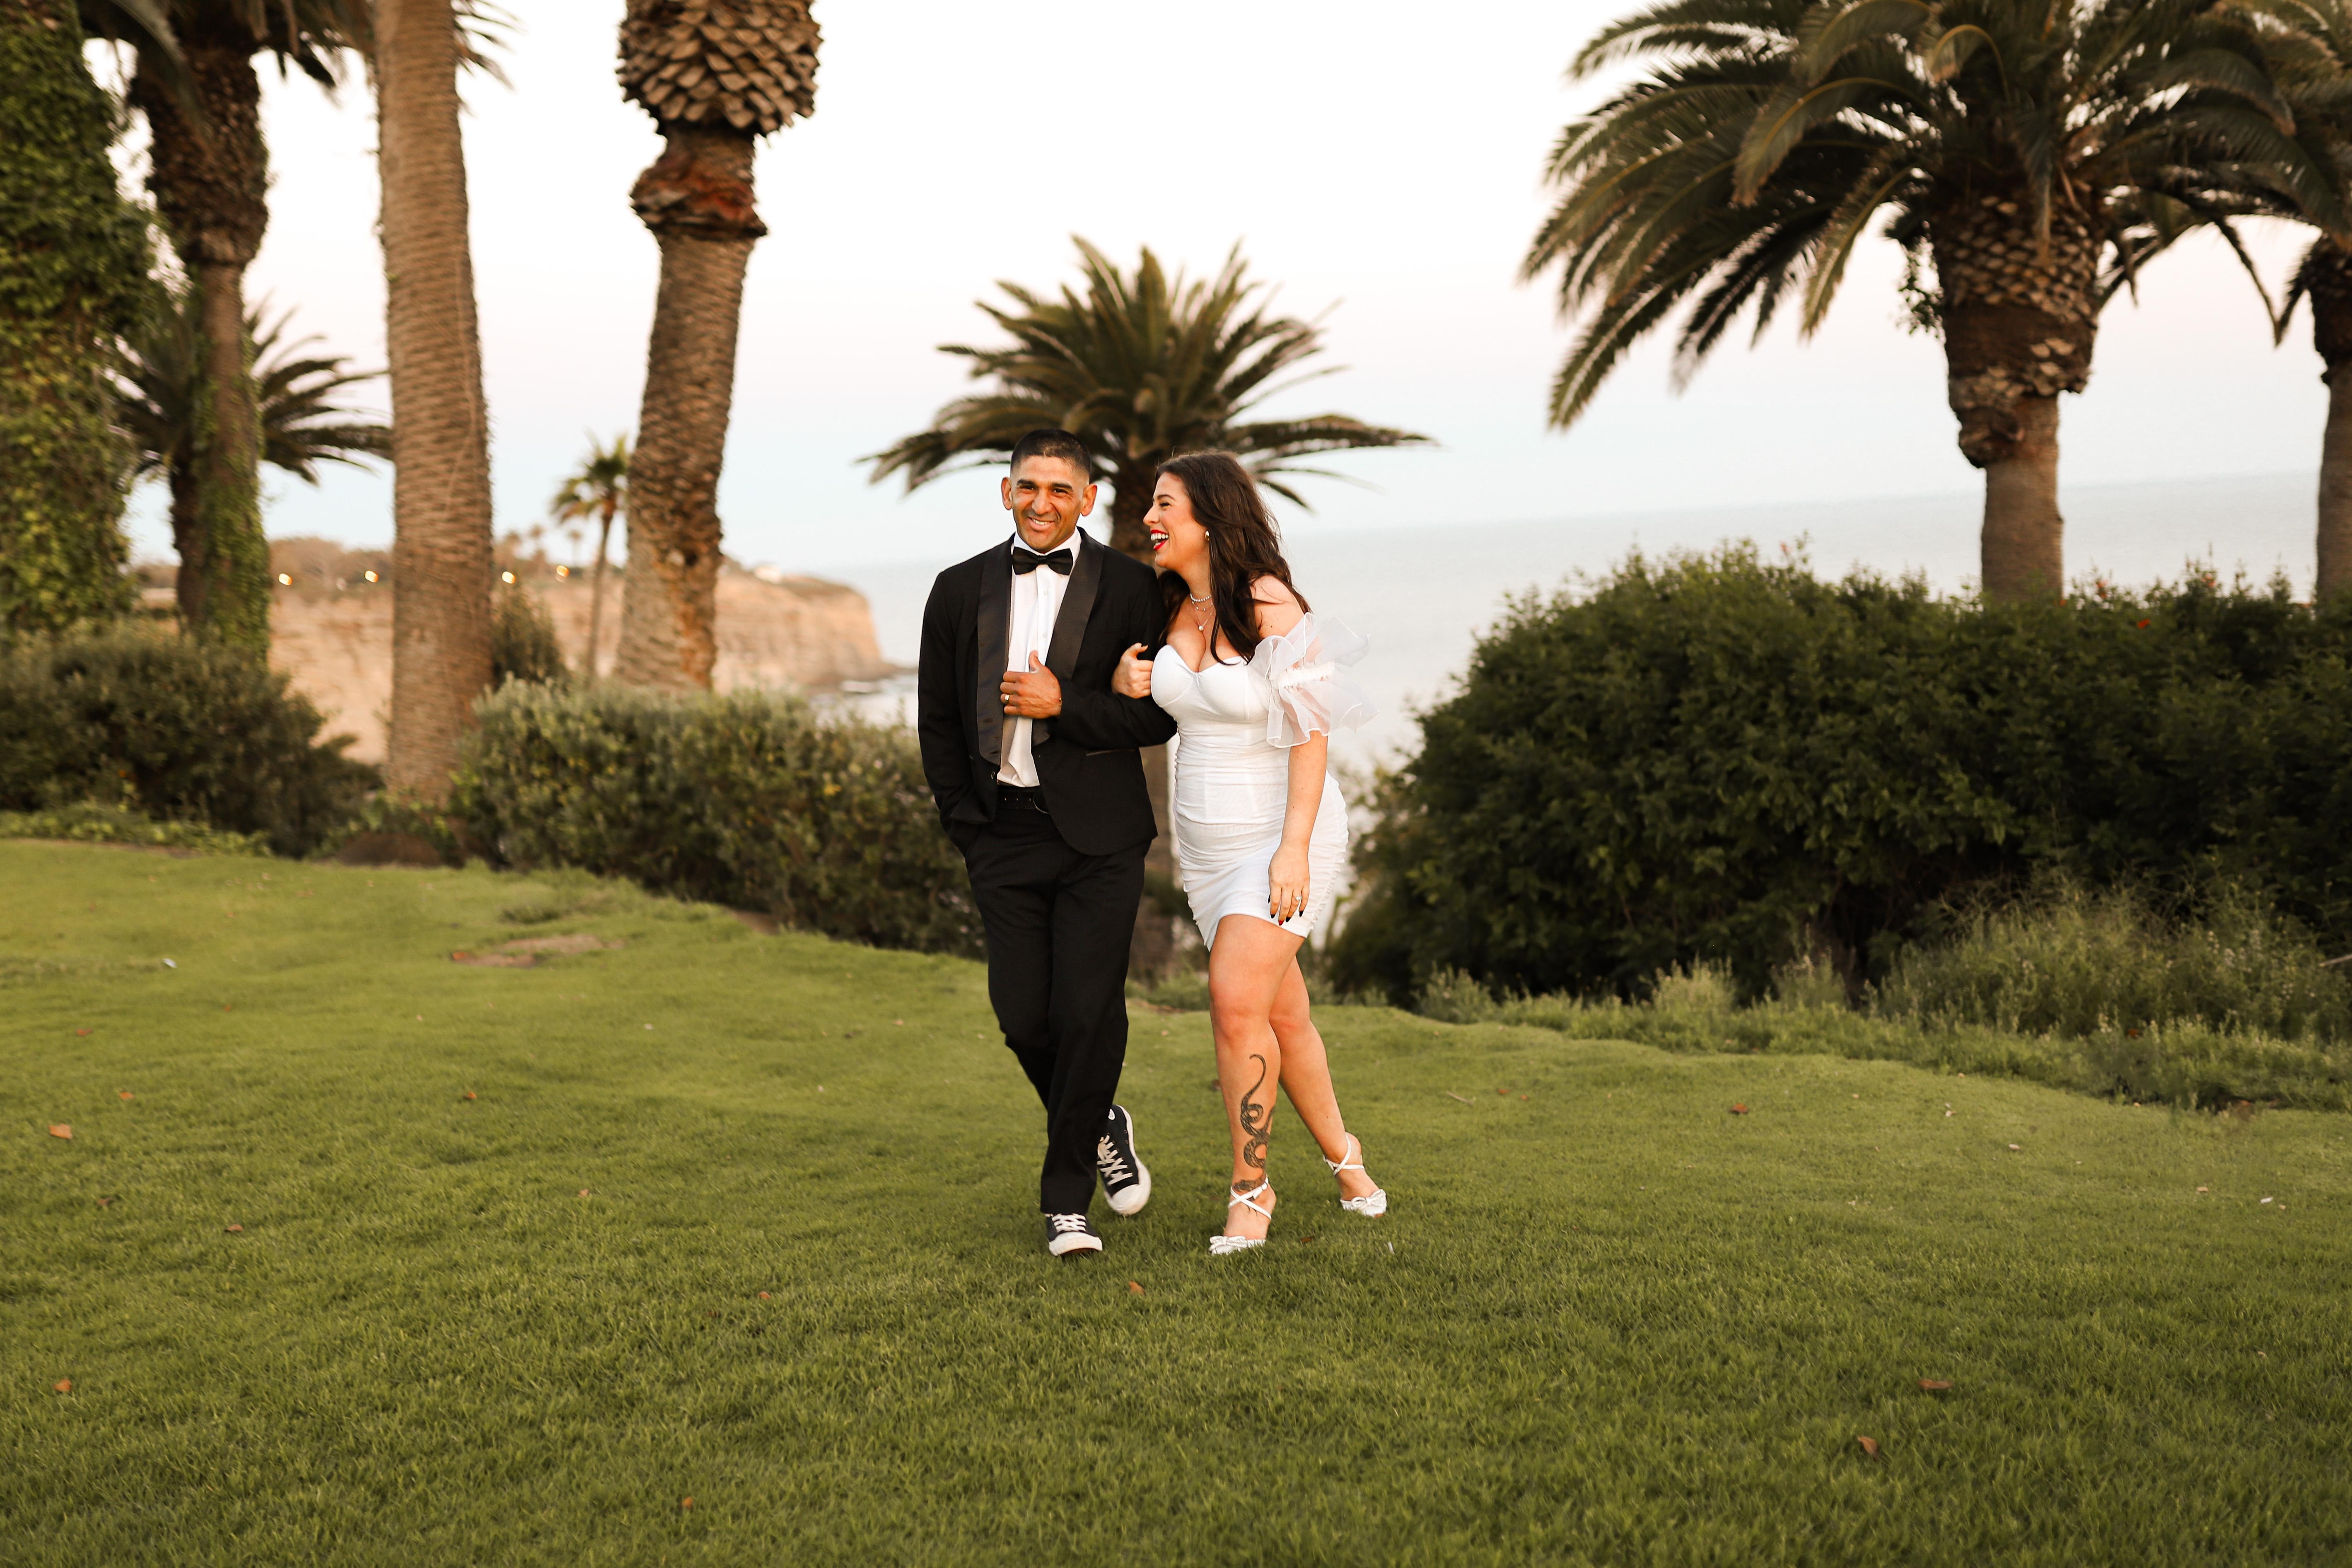 The Wedding Website of Nicole Pimentel and Jonathan Palomino